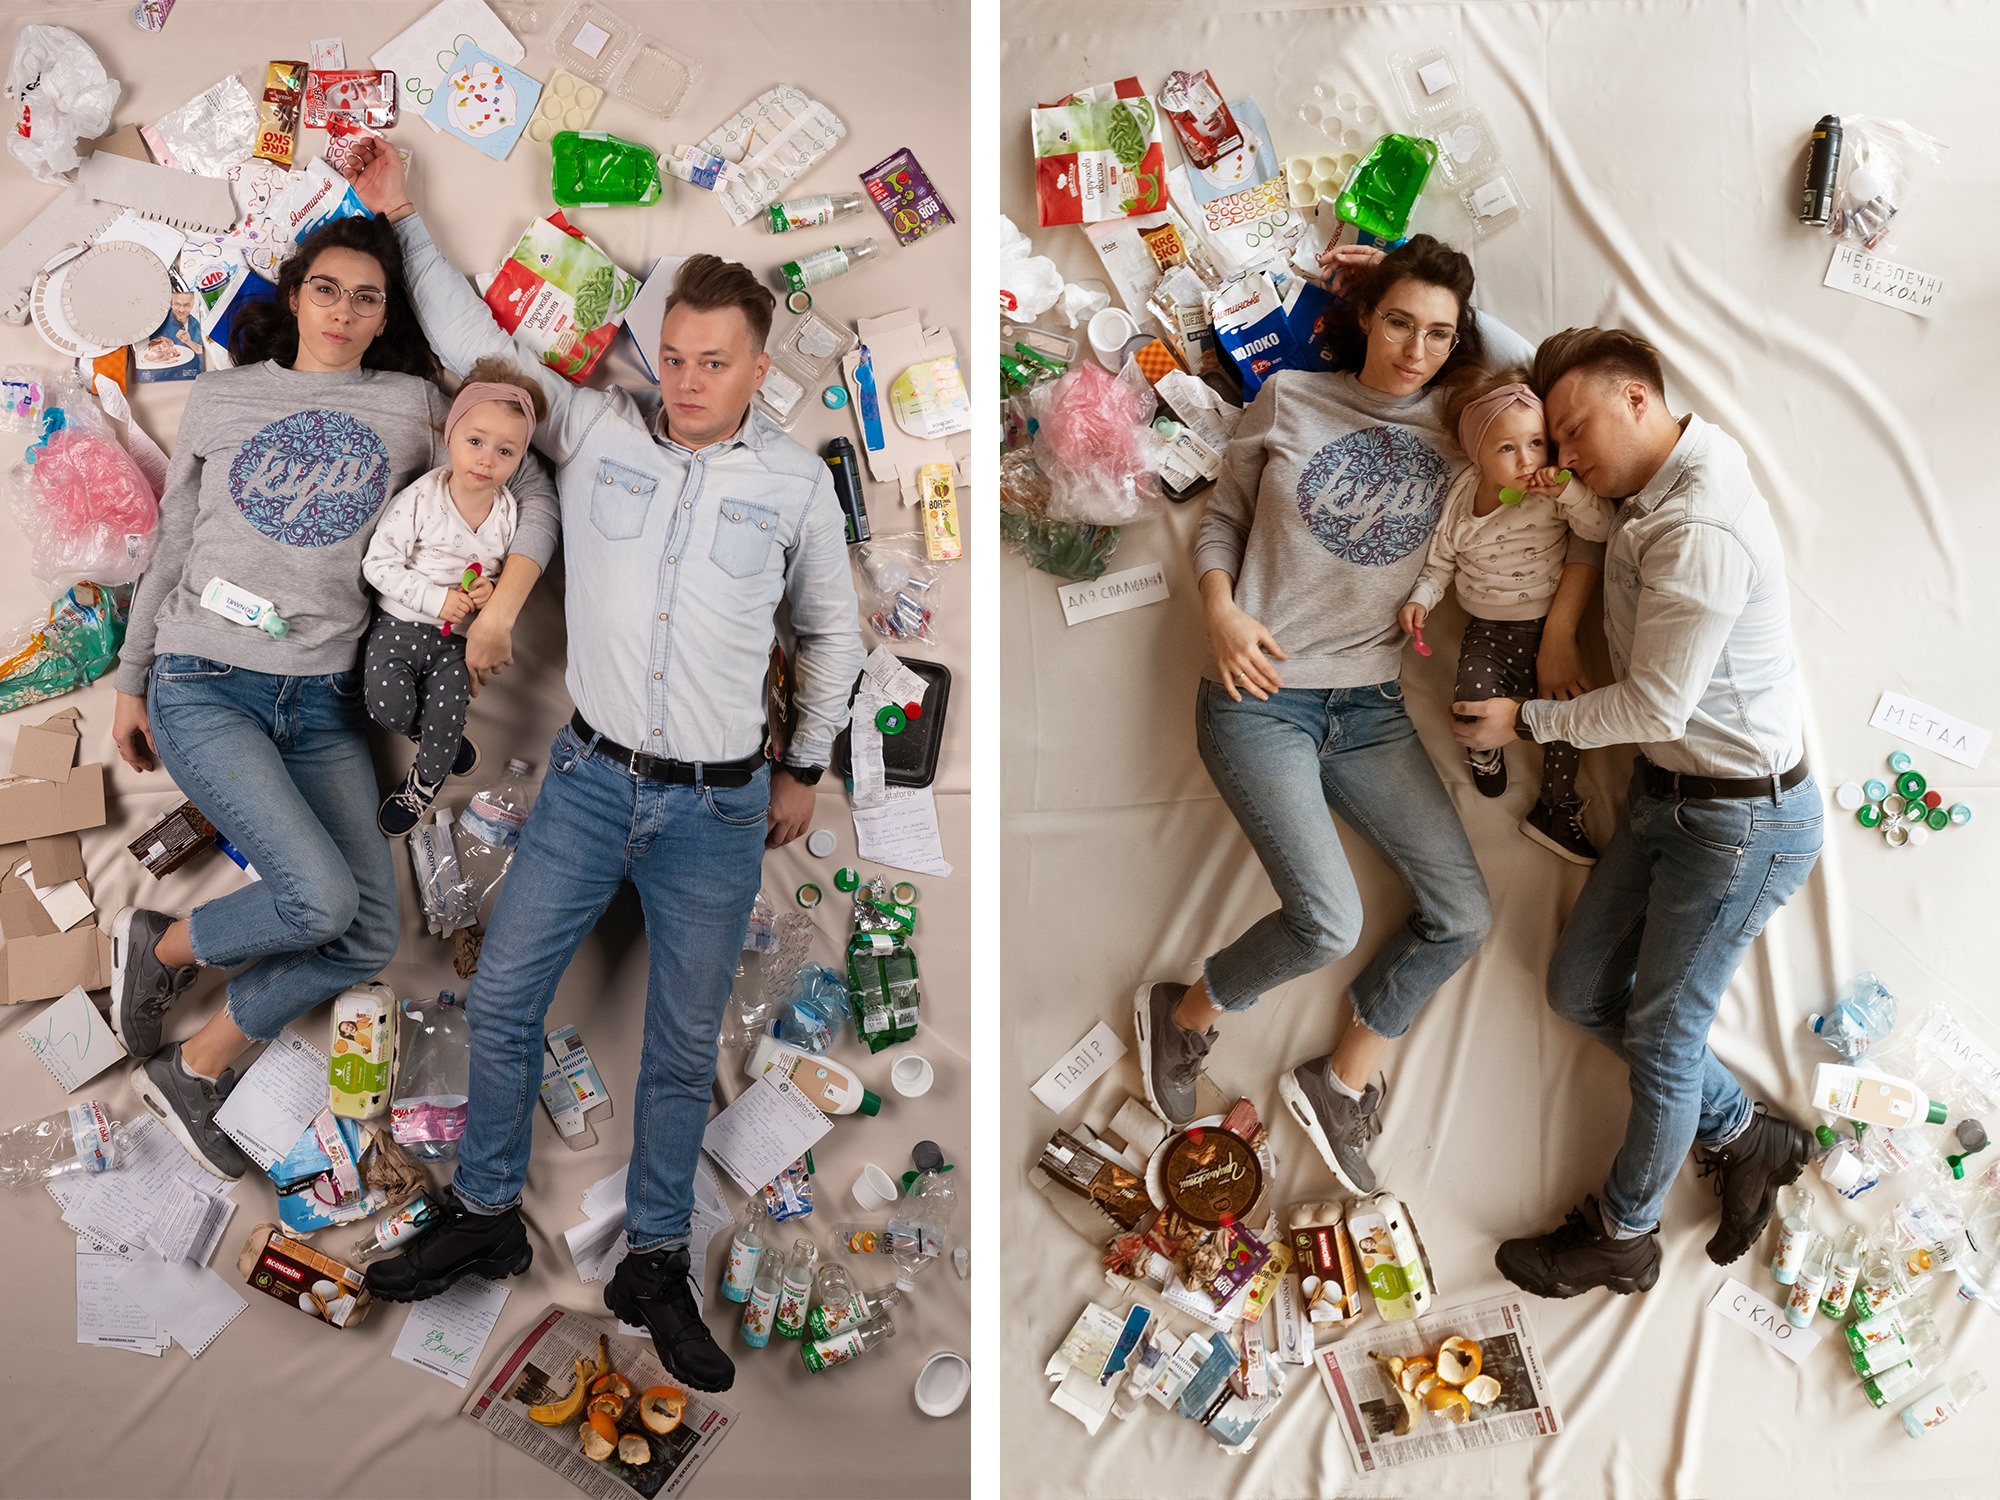 Meet No Waste Ukraine, a non-profit turned an impact-driven business